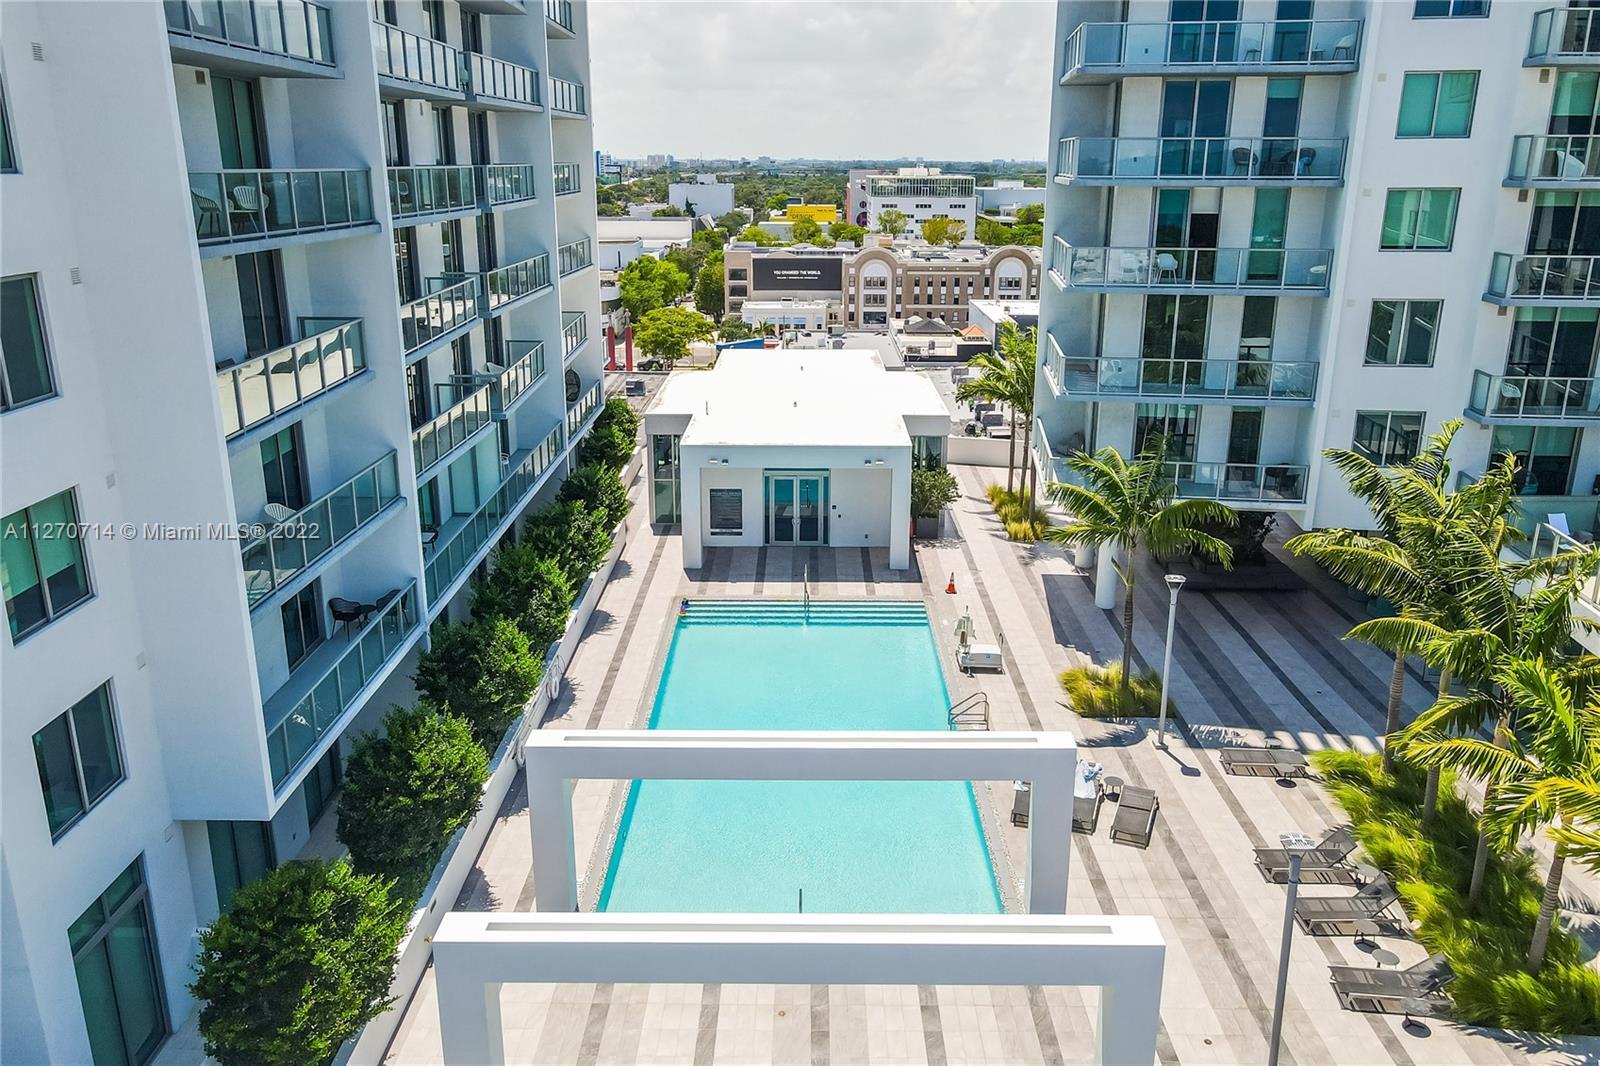 QUADRO-Miami Design District-Turnkey,2 bedroom/2 bath short term resort style rental property (3-day